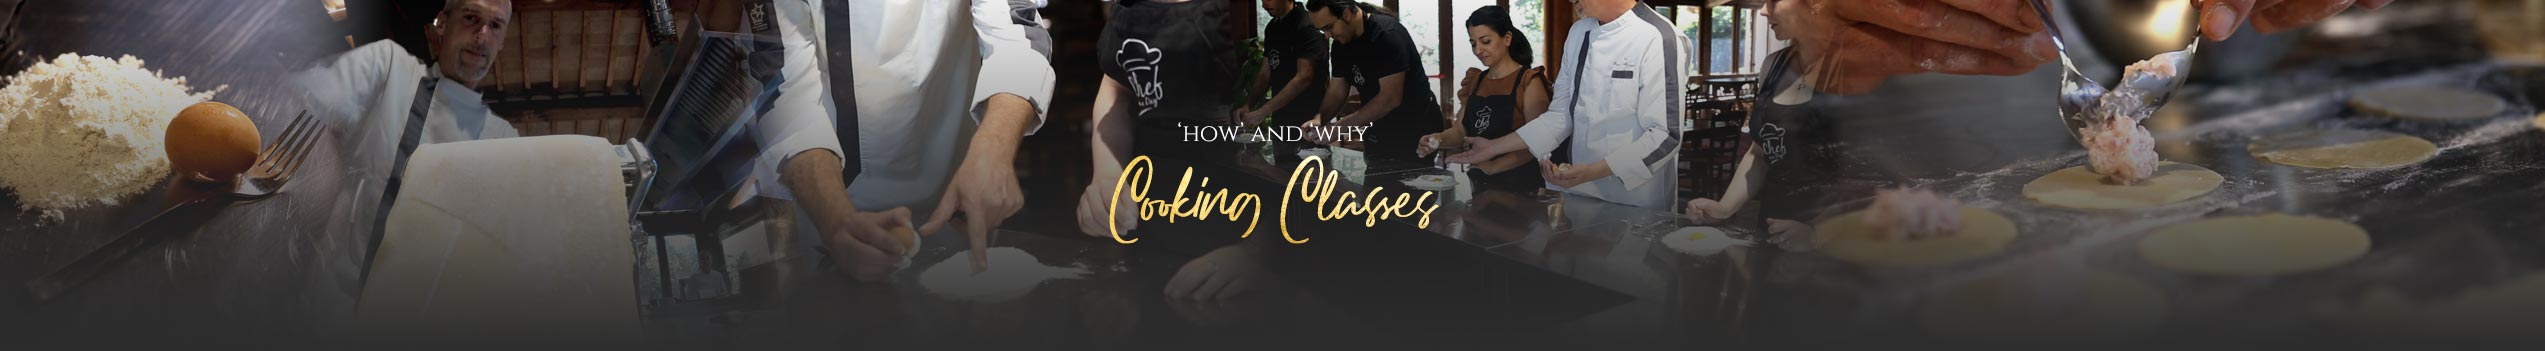 Casale-Alessandri-cooking-classes-Slider